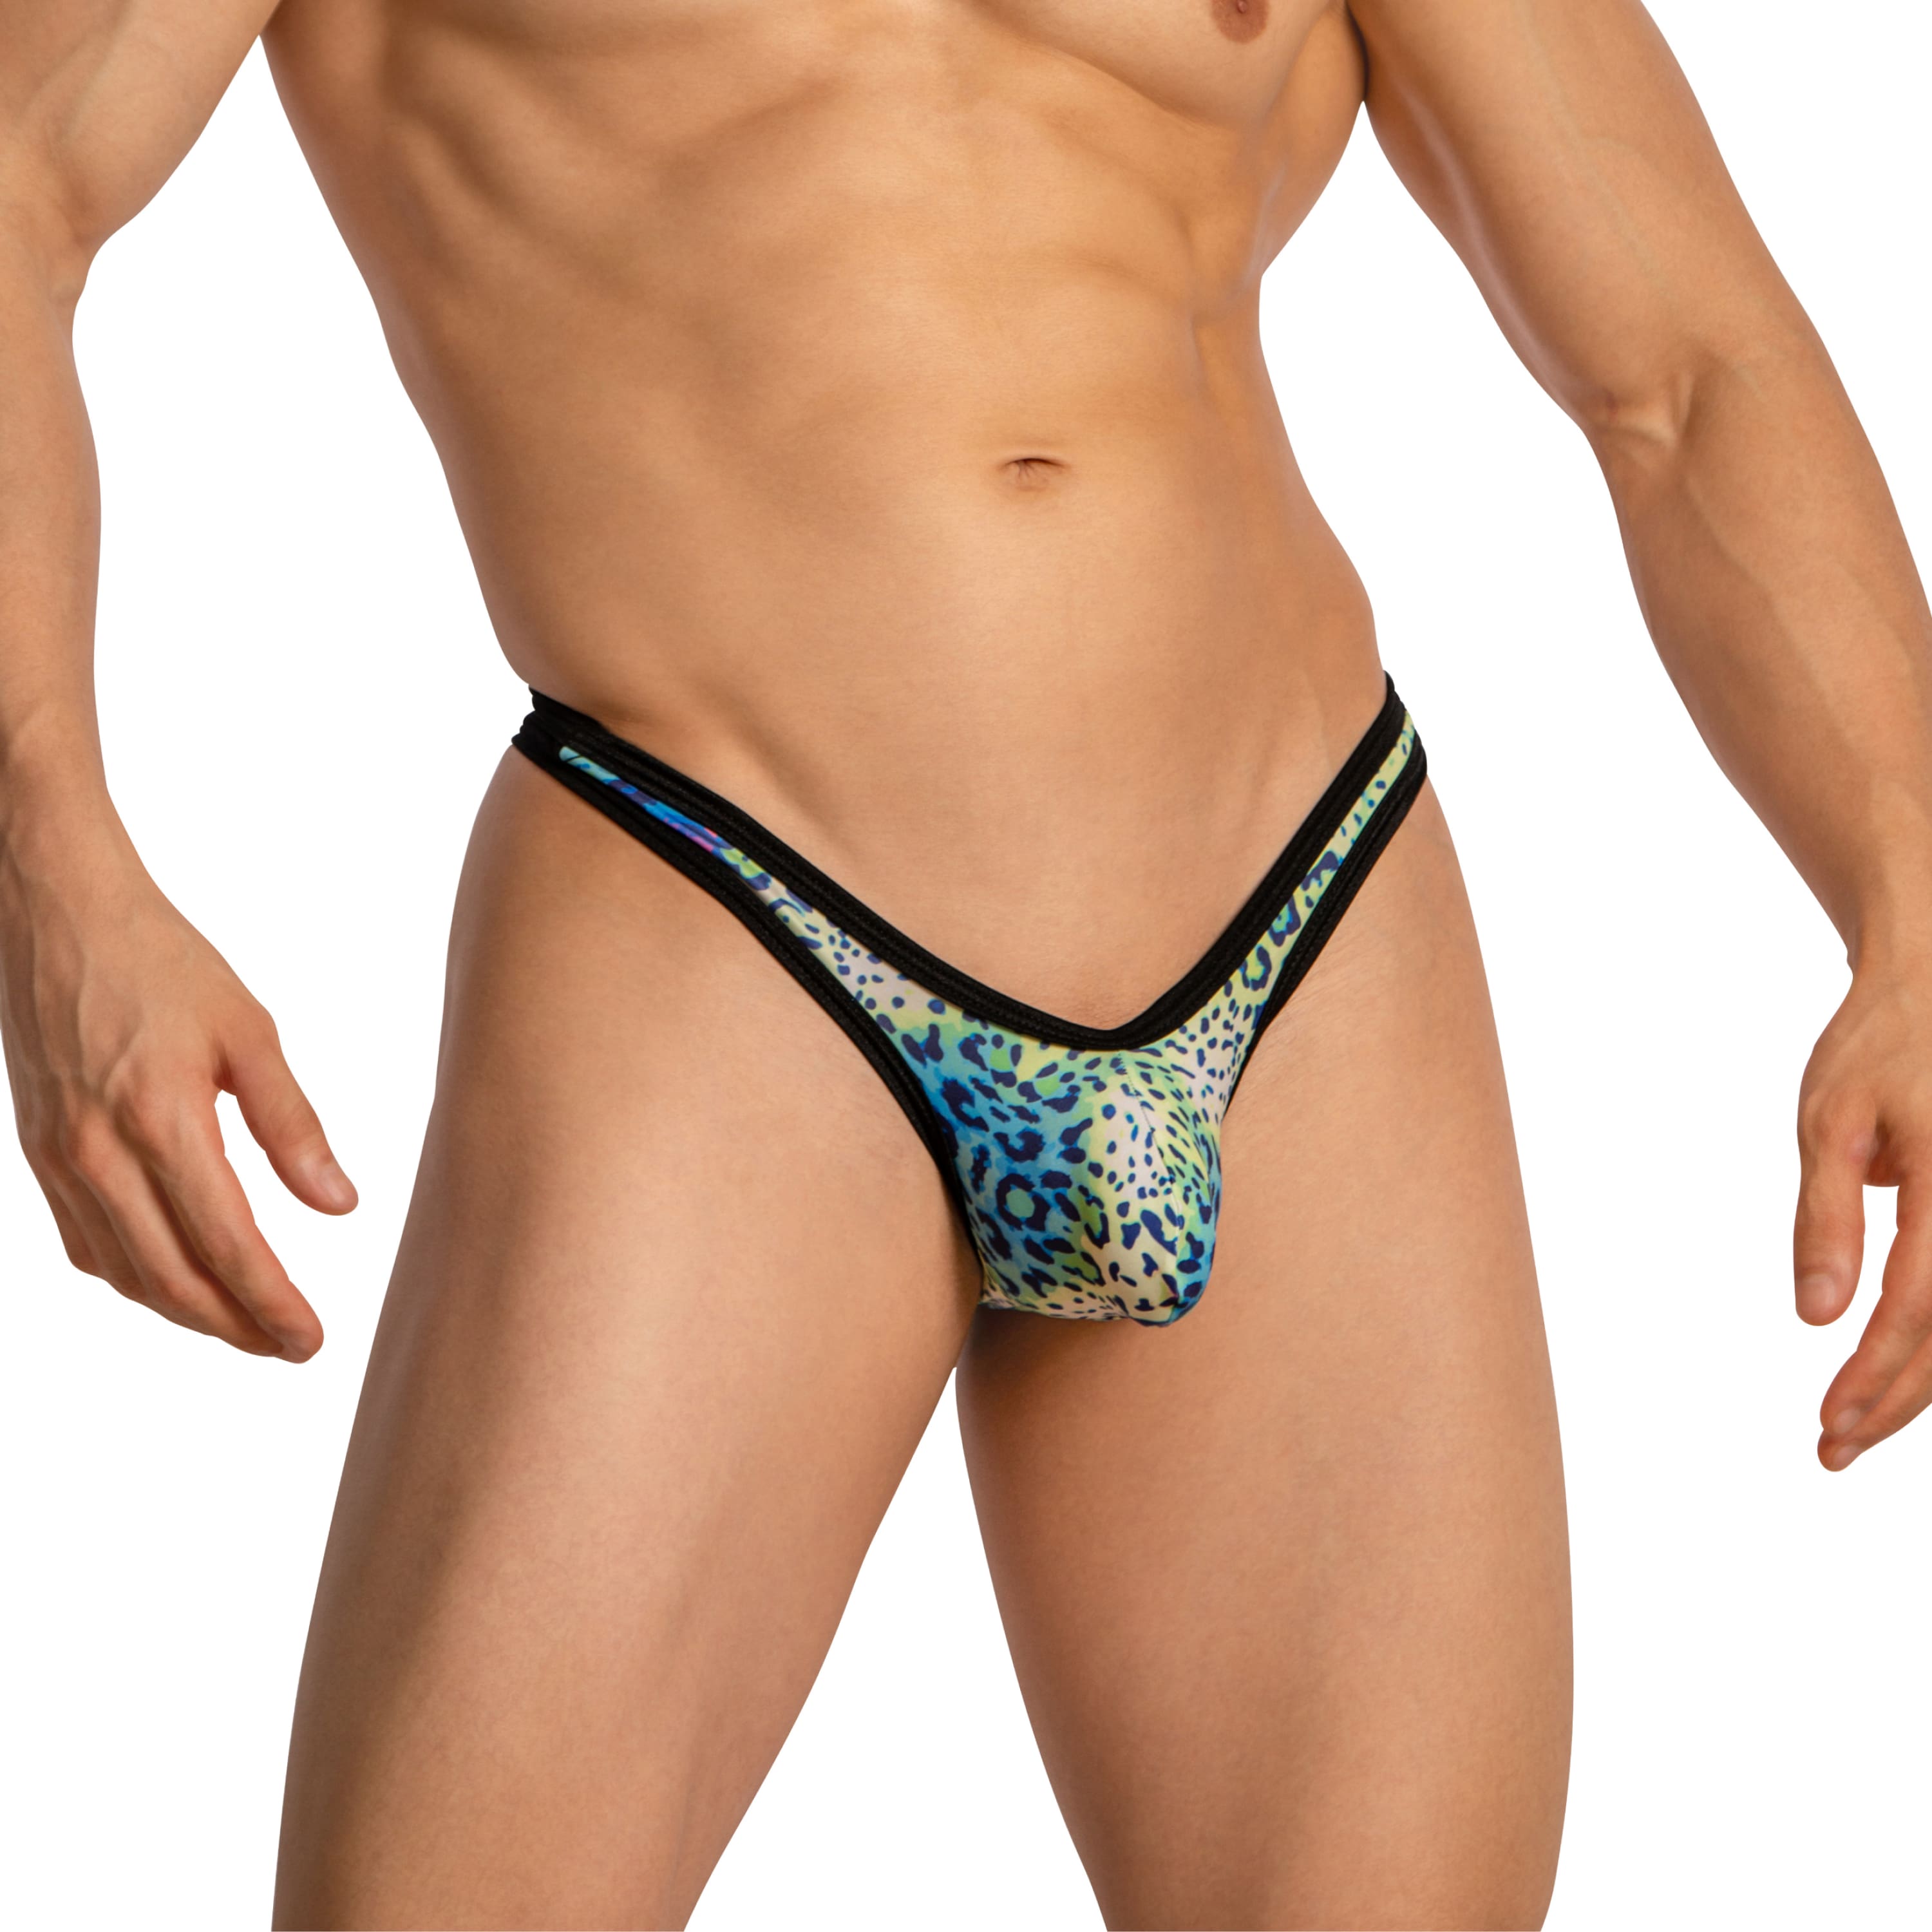 Daniel Alexander DAK076 Thong with animal print and transparency Sensual Men's Underwear